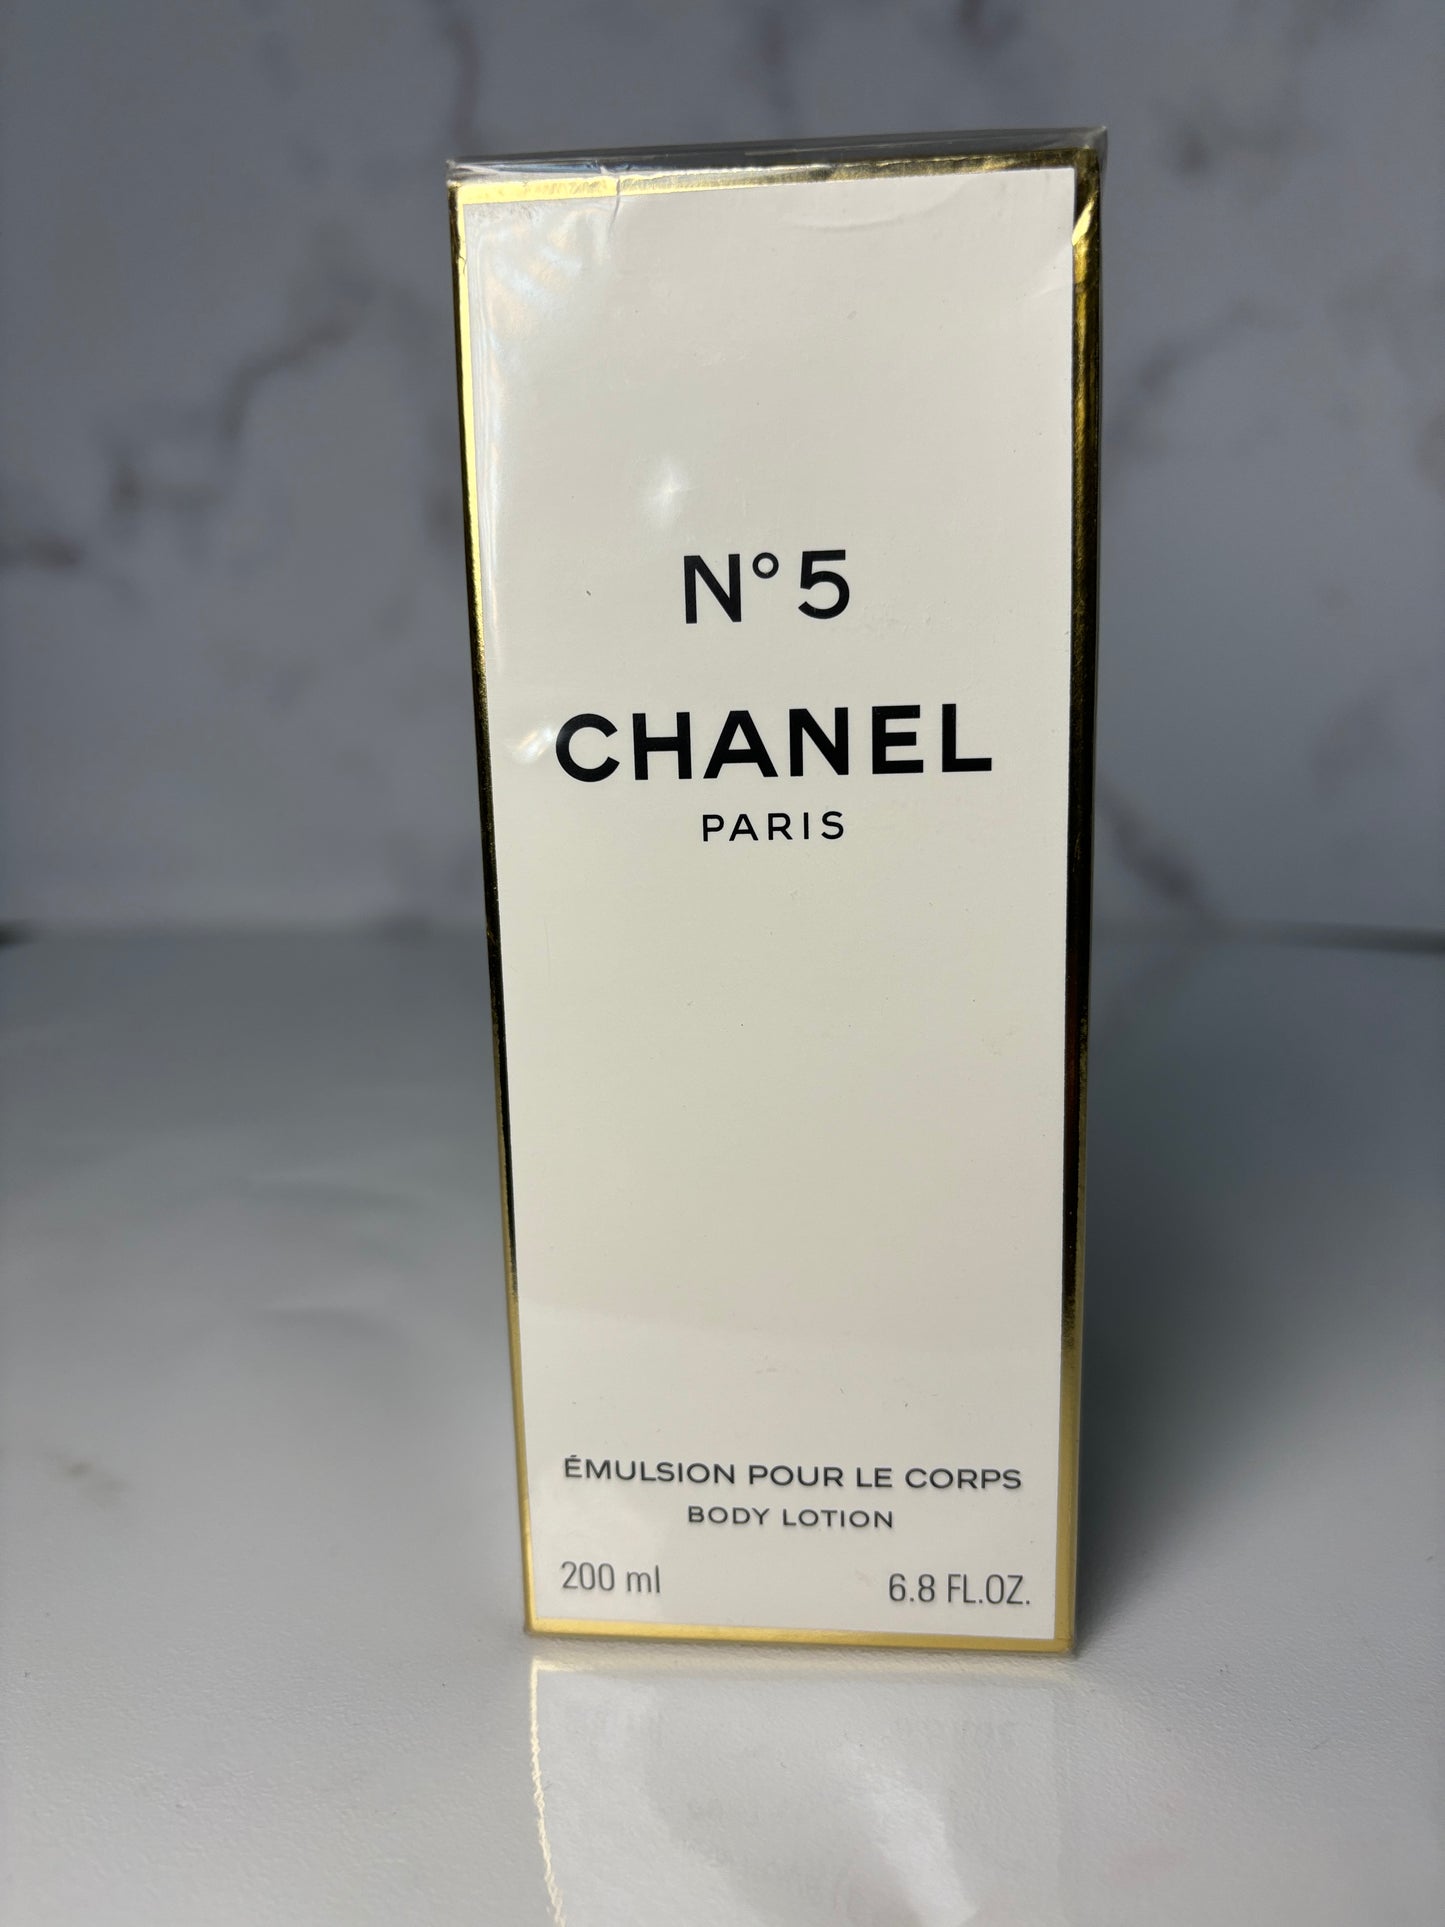 Sealed Chanel No. 5 Emulsion Pour Le corps Body Lotion  200ml 6.8 oz   - 250624